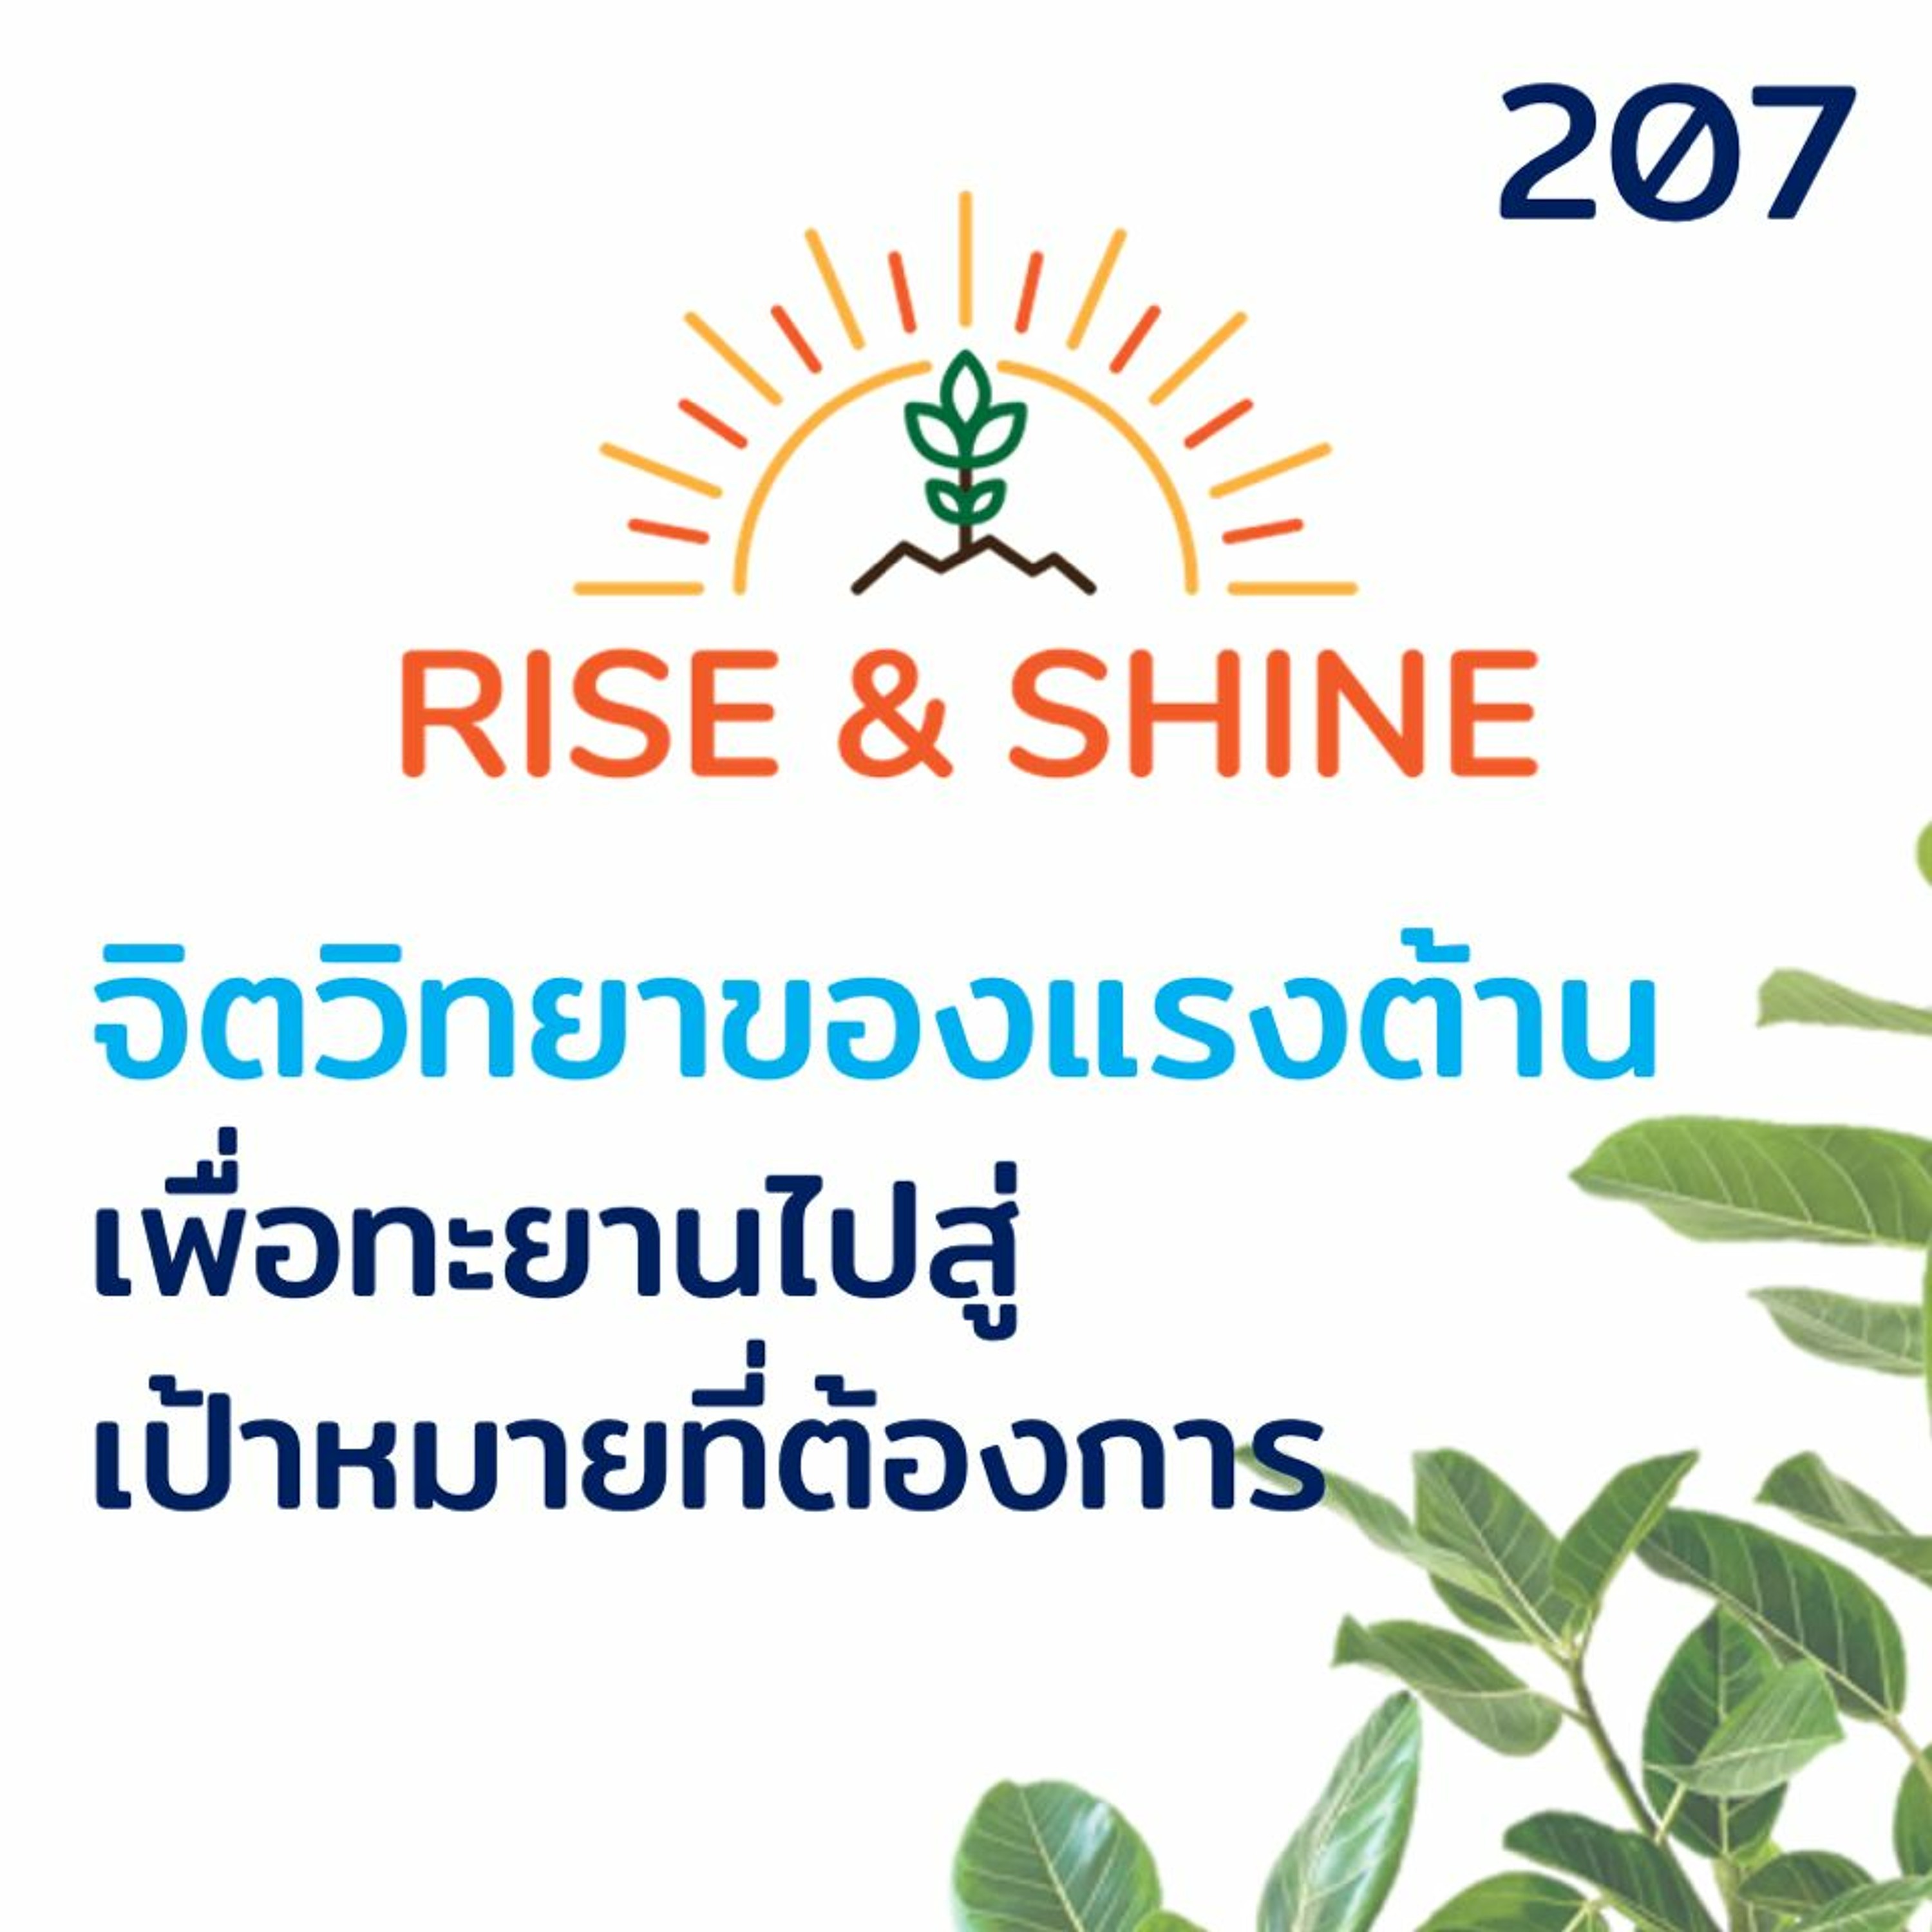 Rise & Shine 207 จิตวิทยาของแรงต้าน เพื่อทะยานไปสู่เป้าหมายที่ต้องการ